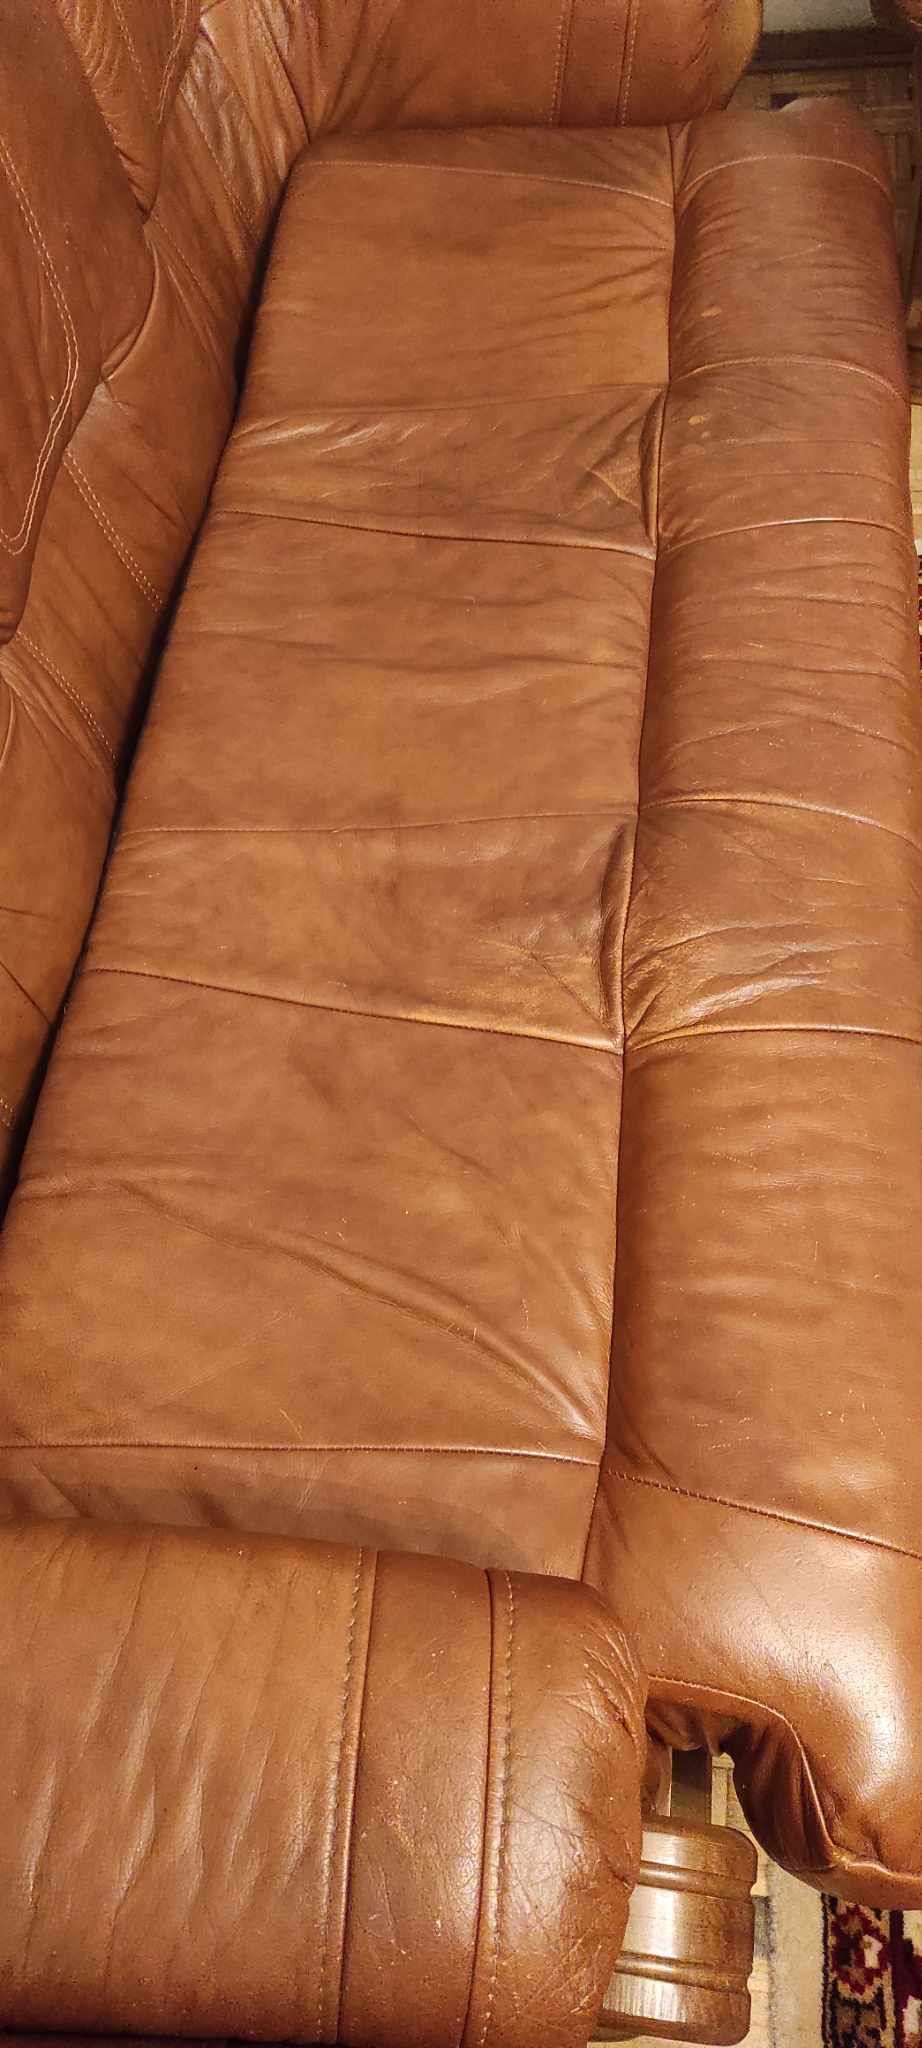 Sofa fotel plus kanapa zestaw